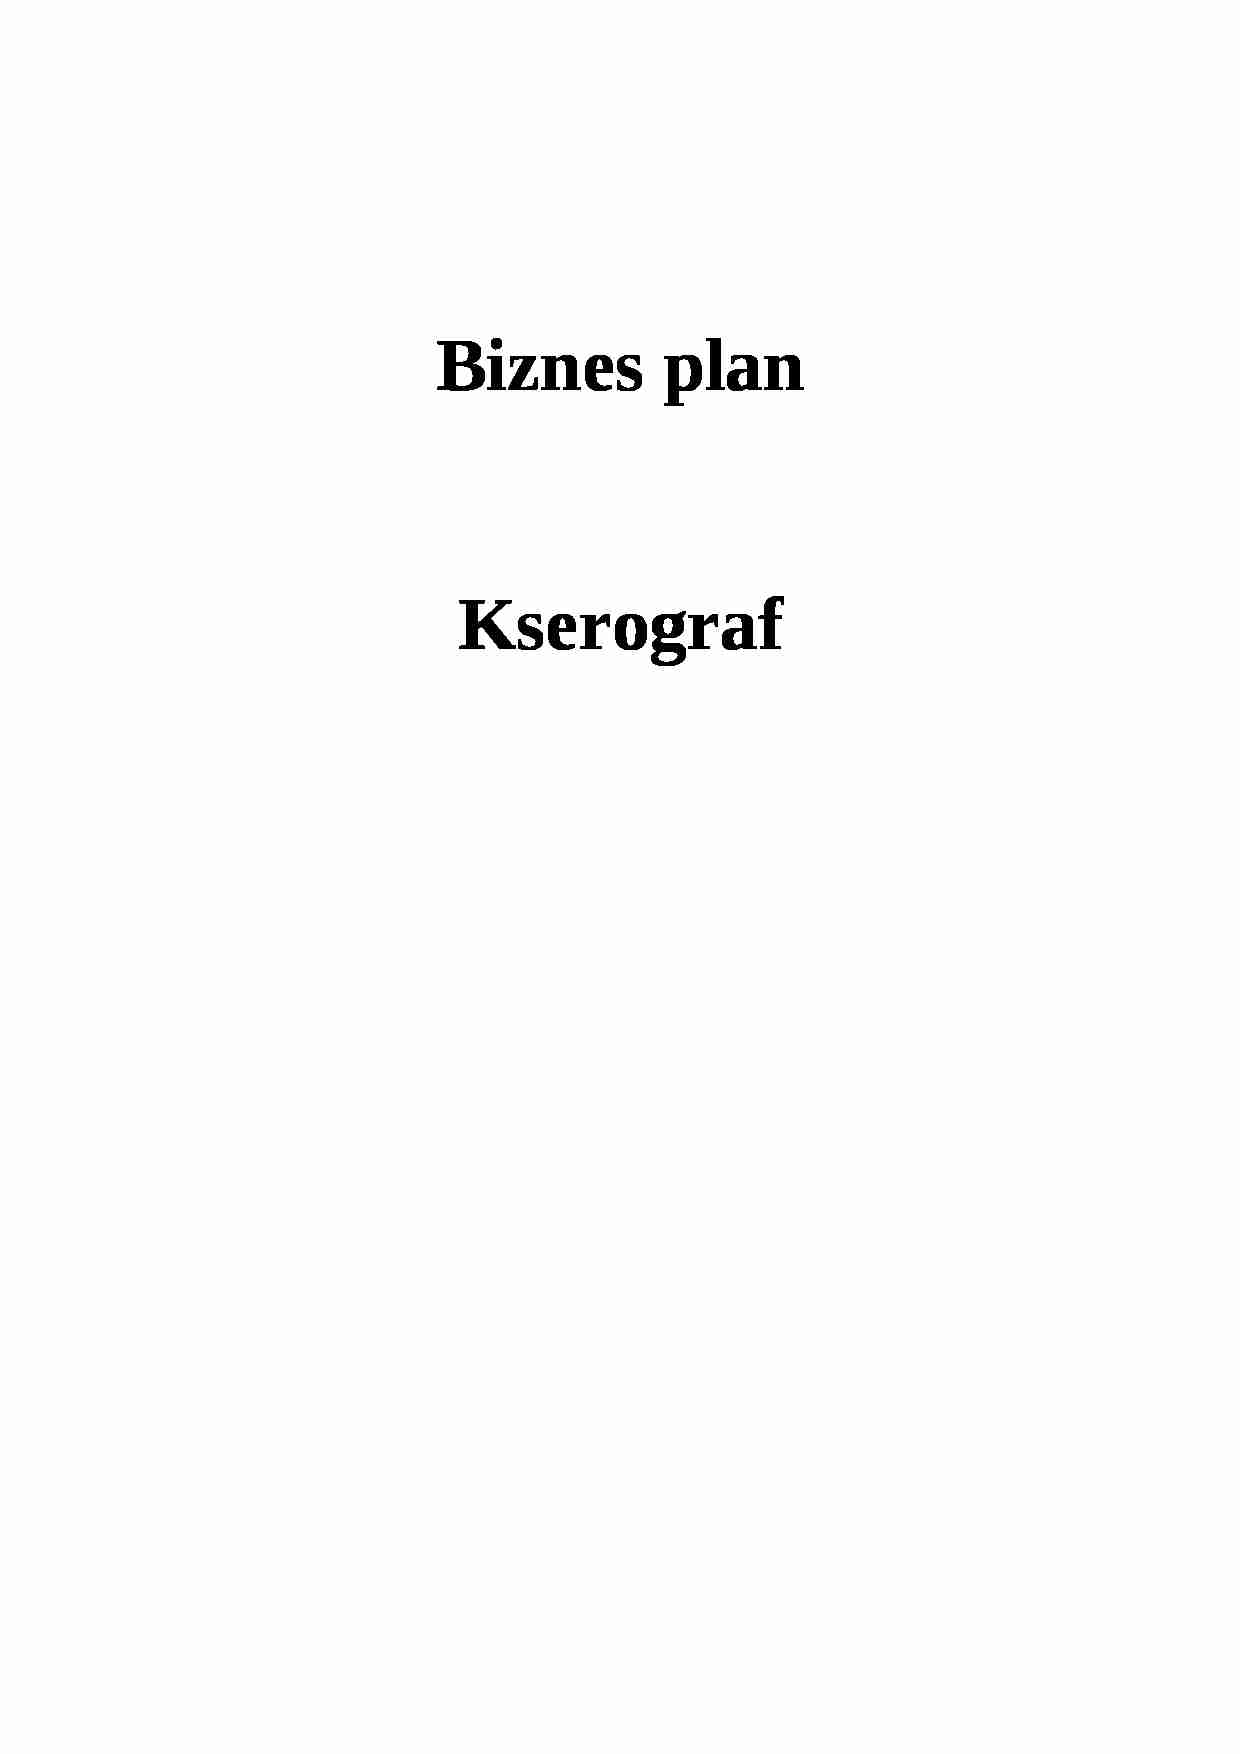 Biznes plan - punkt ksero - strona 1